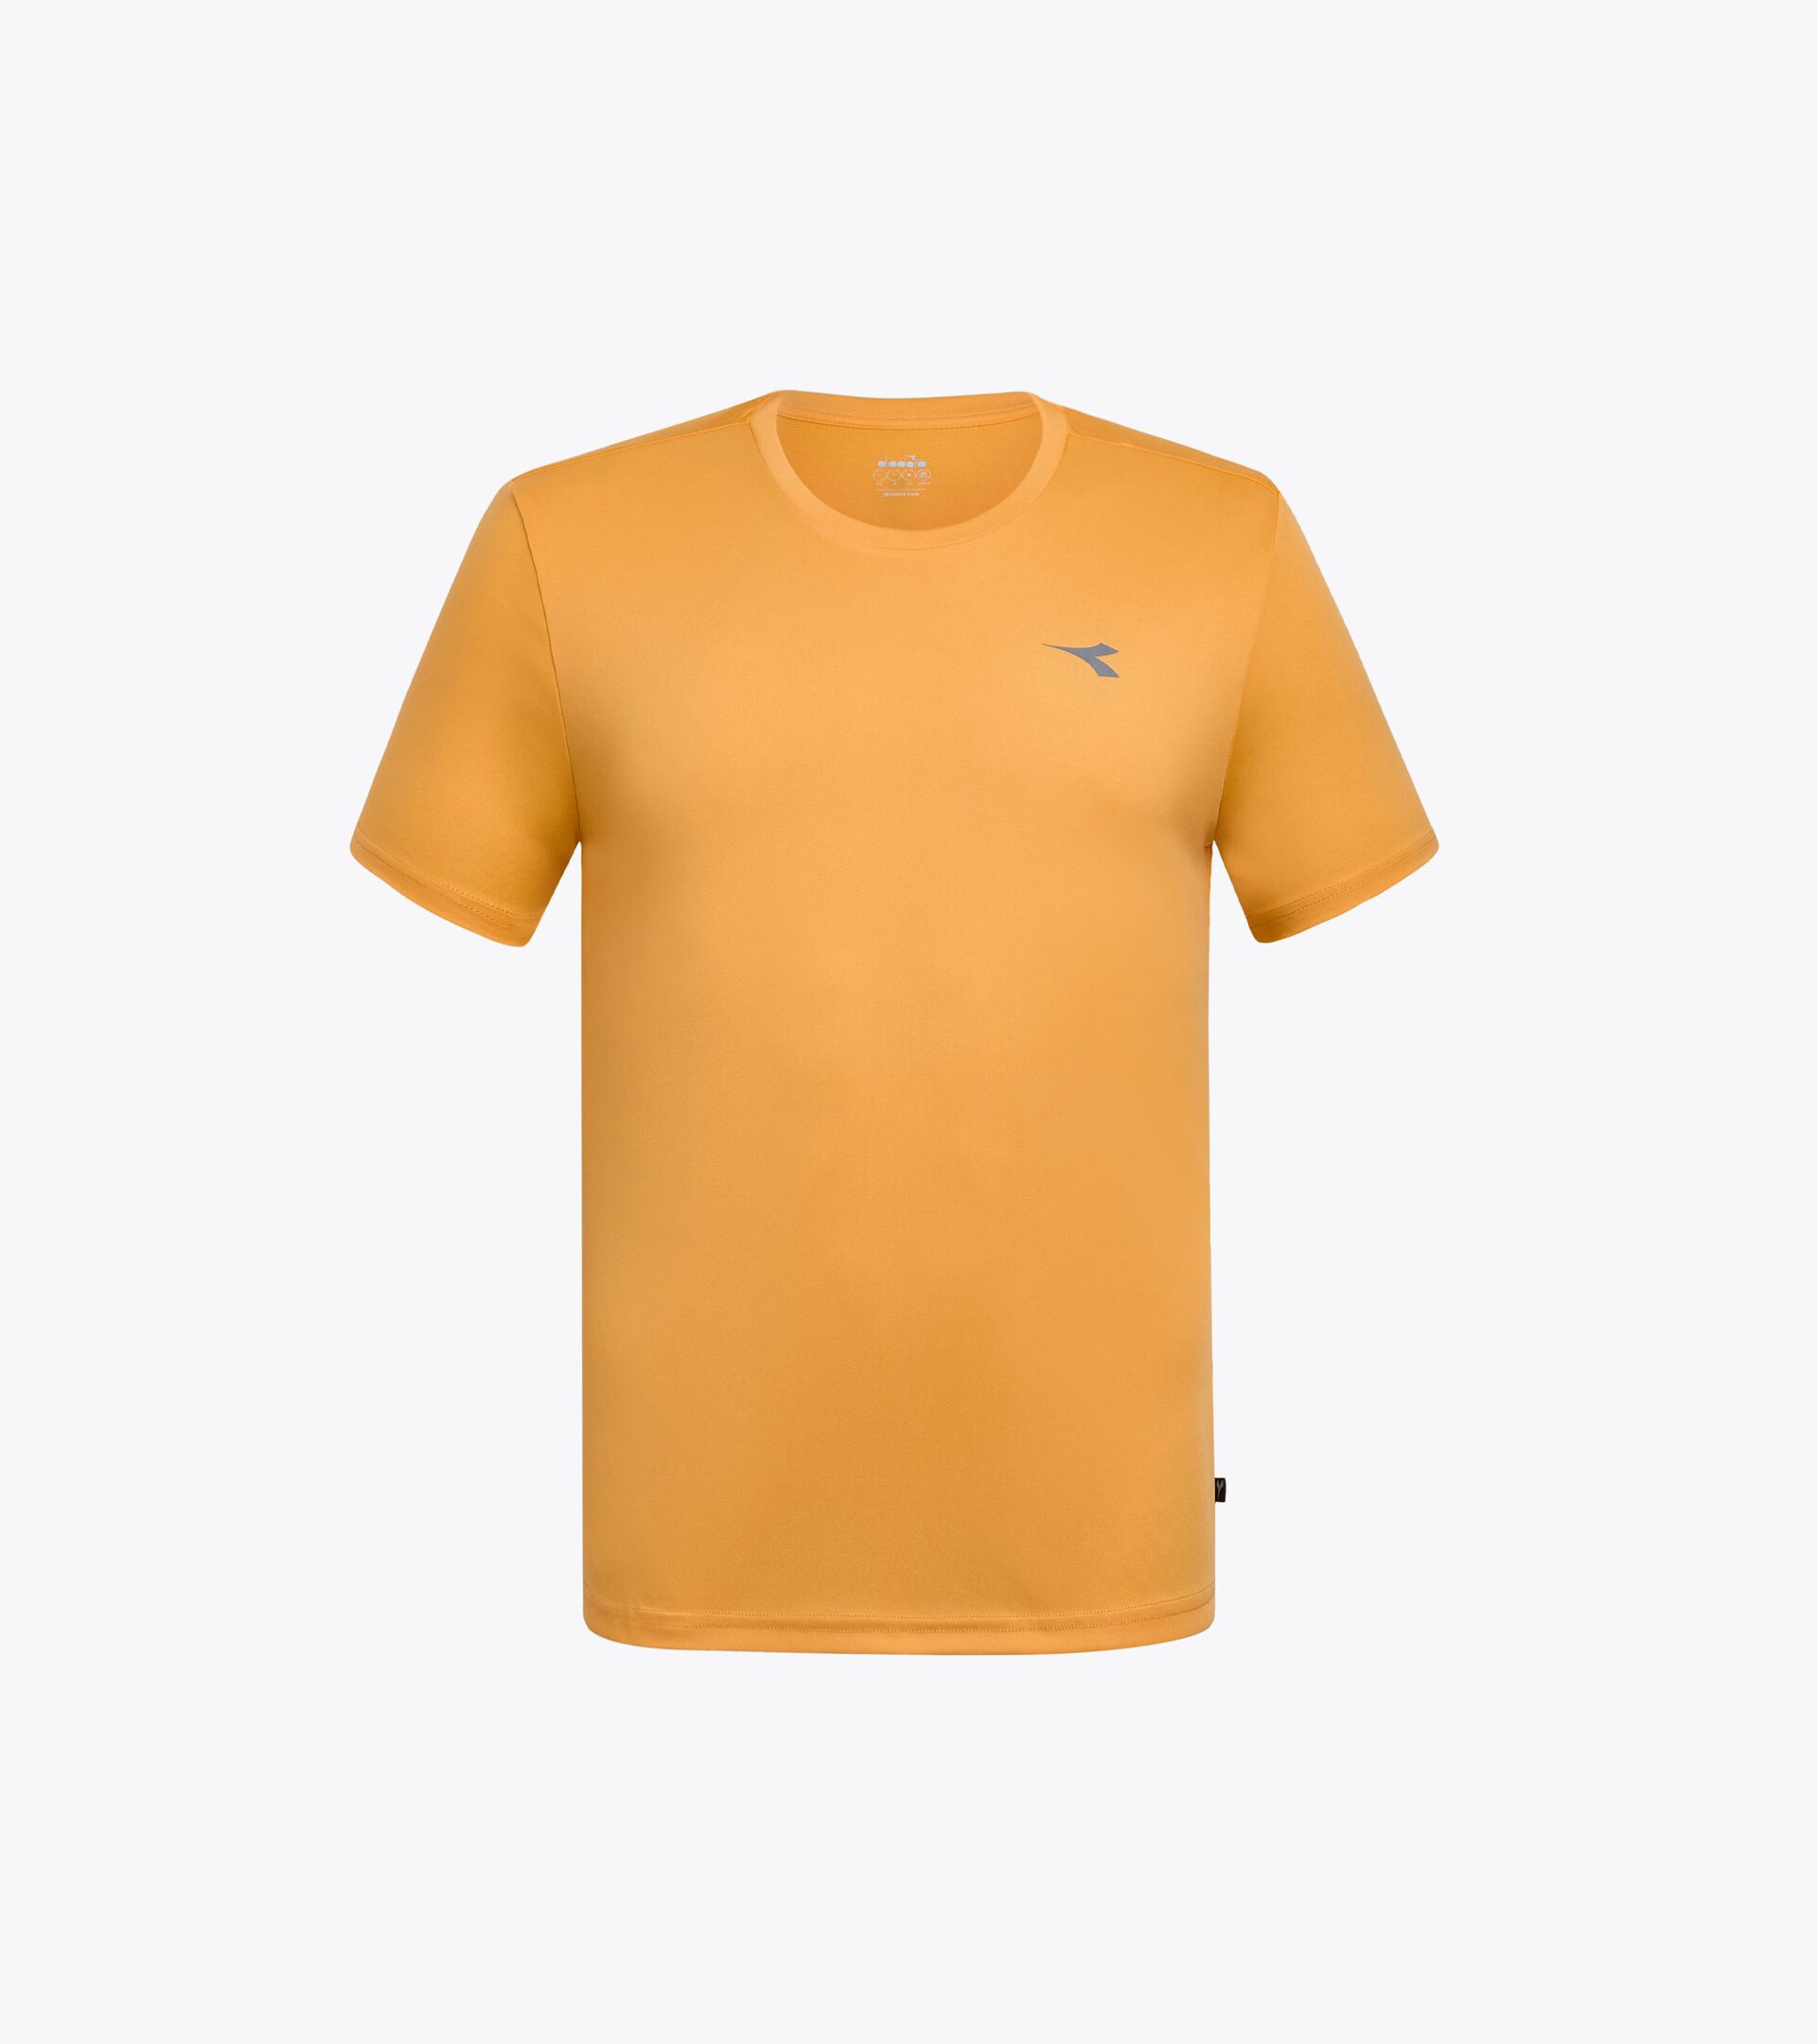 Sportliches T-Shirt - Herren SS T-SHIRT RUN KUMQUAT ORANGE - Diadora